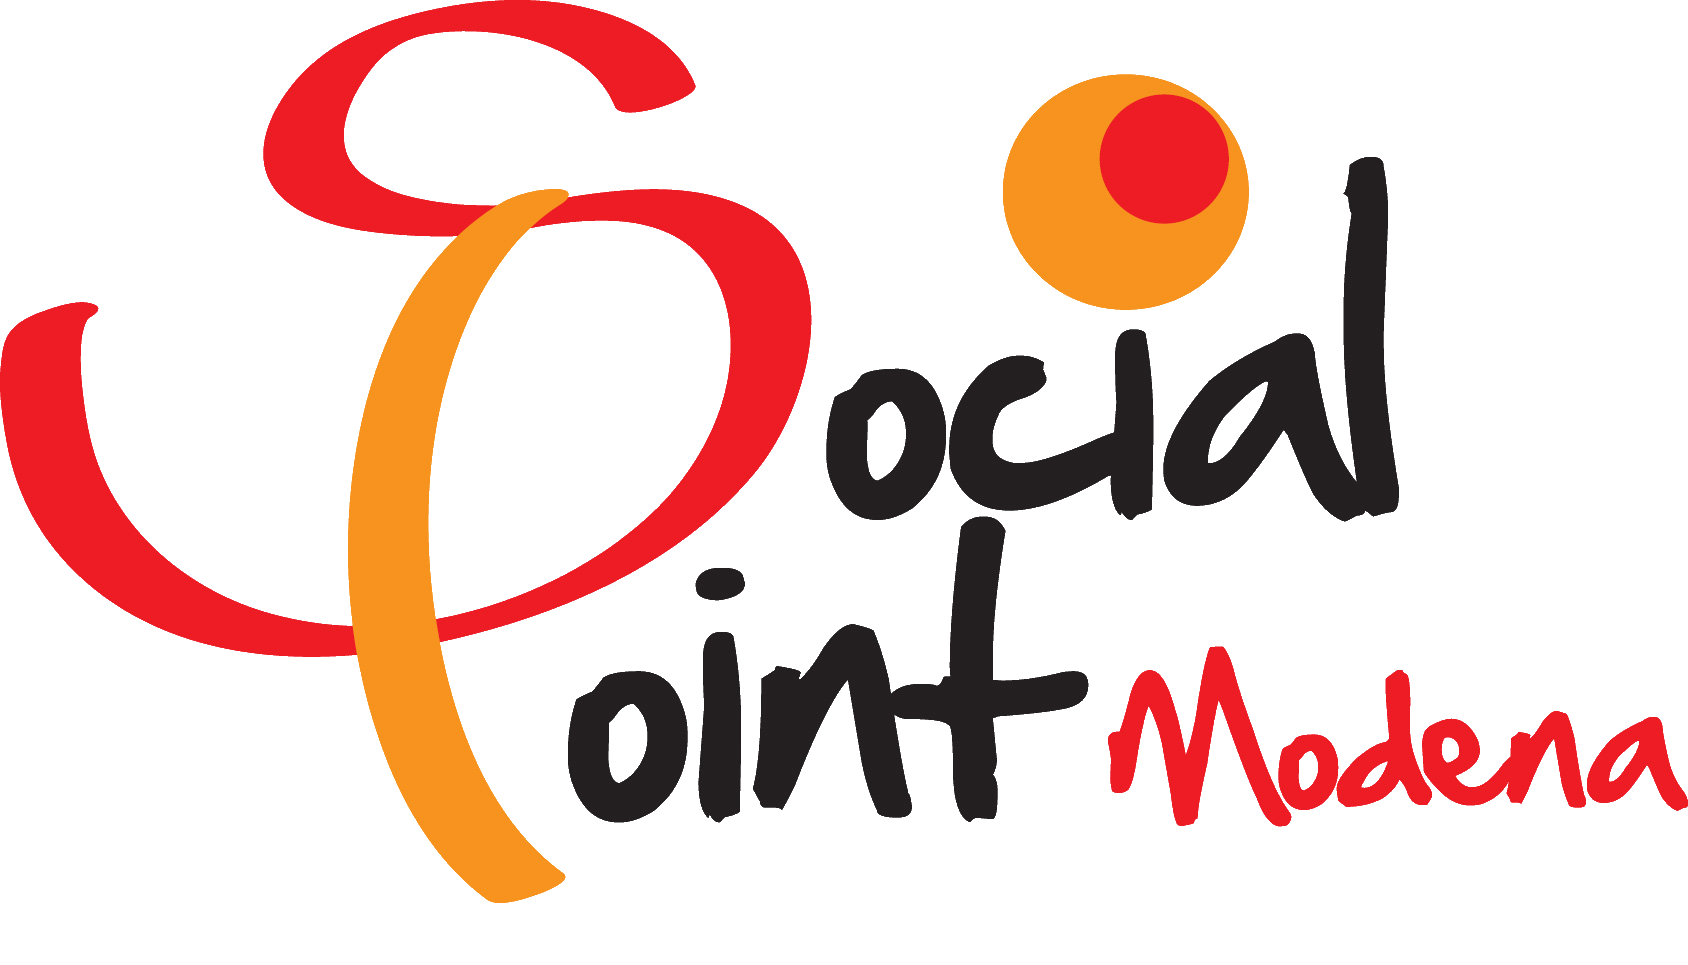 Social Point Modena